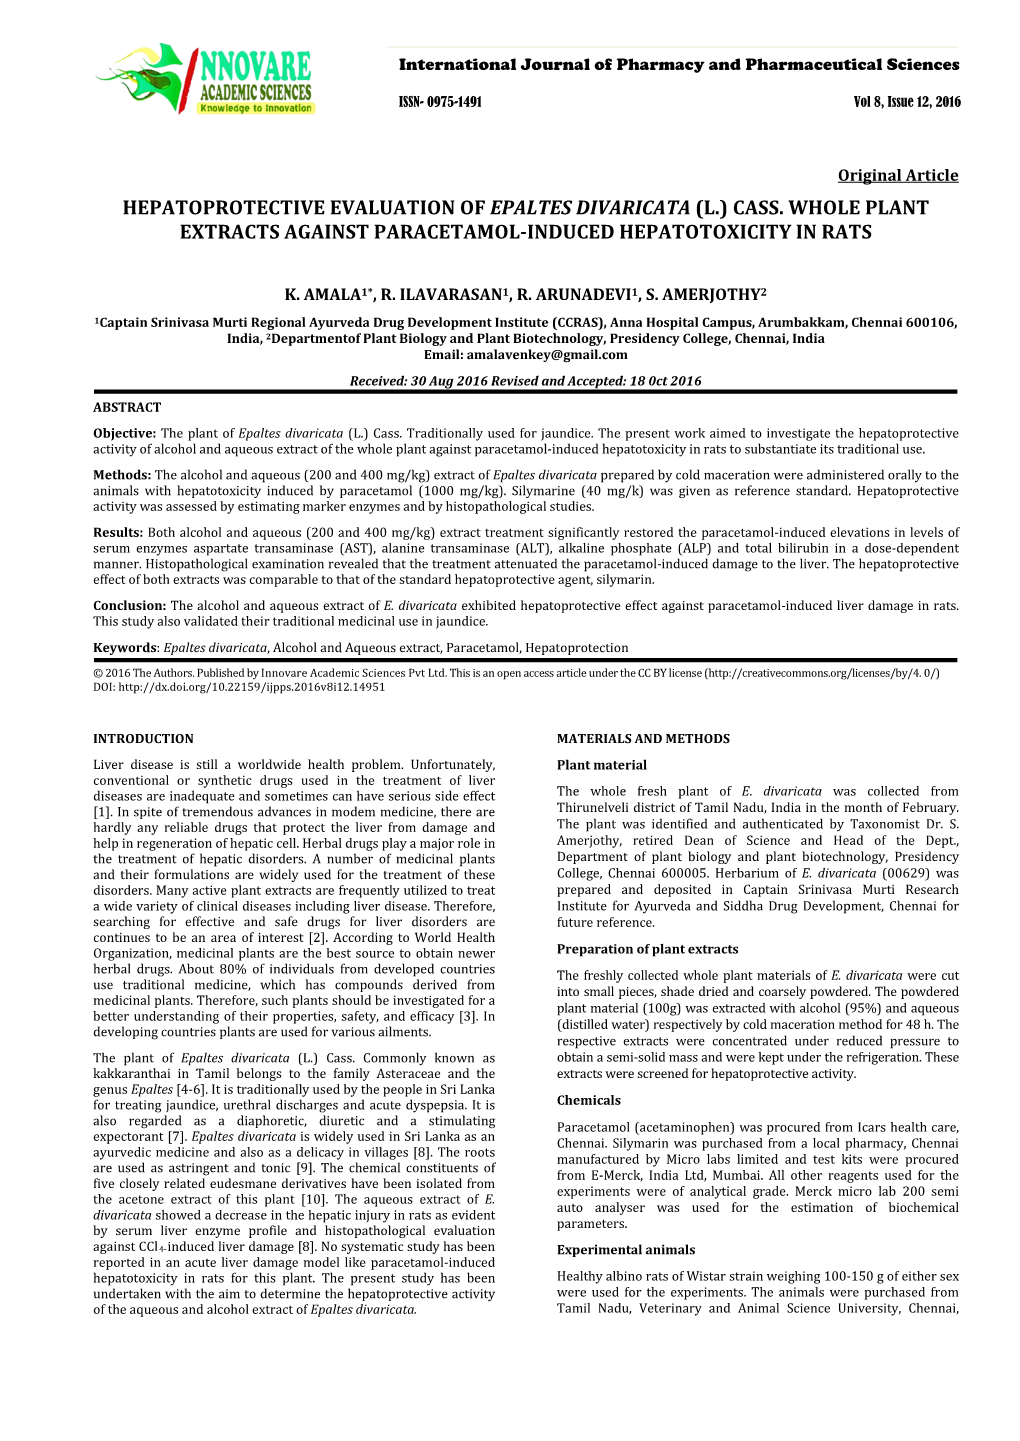 Hepatoprotective Evaluation of Epaltes Divaricata (L.) Cass